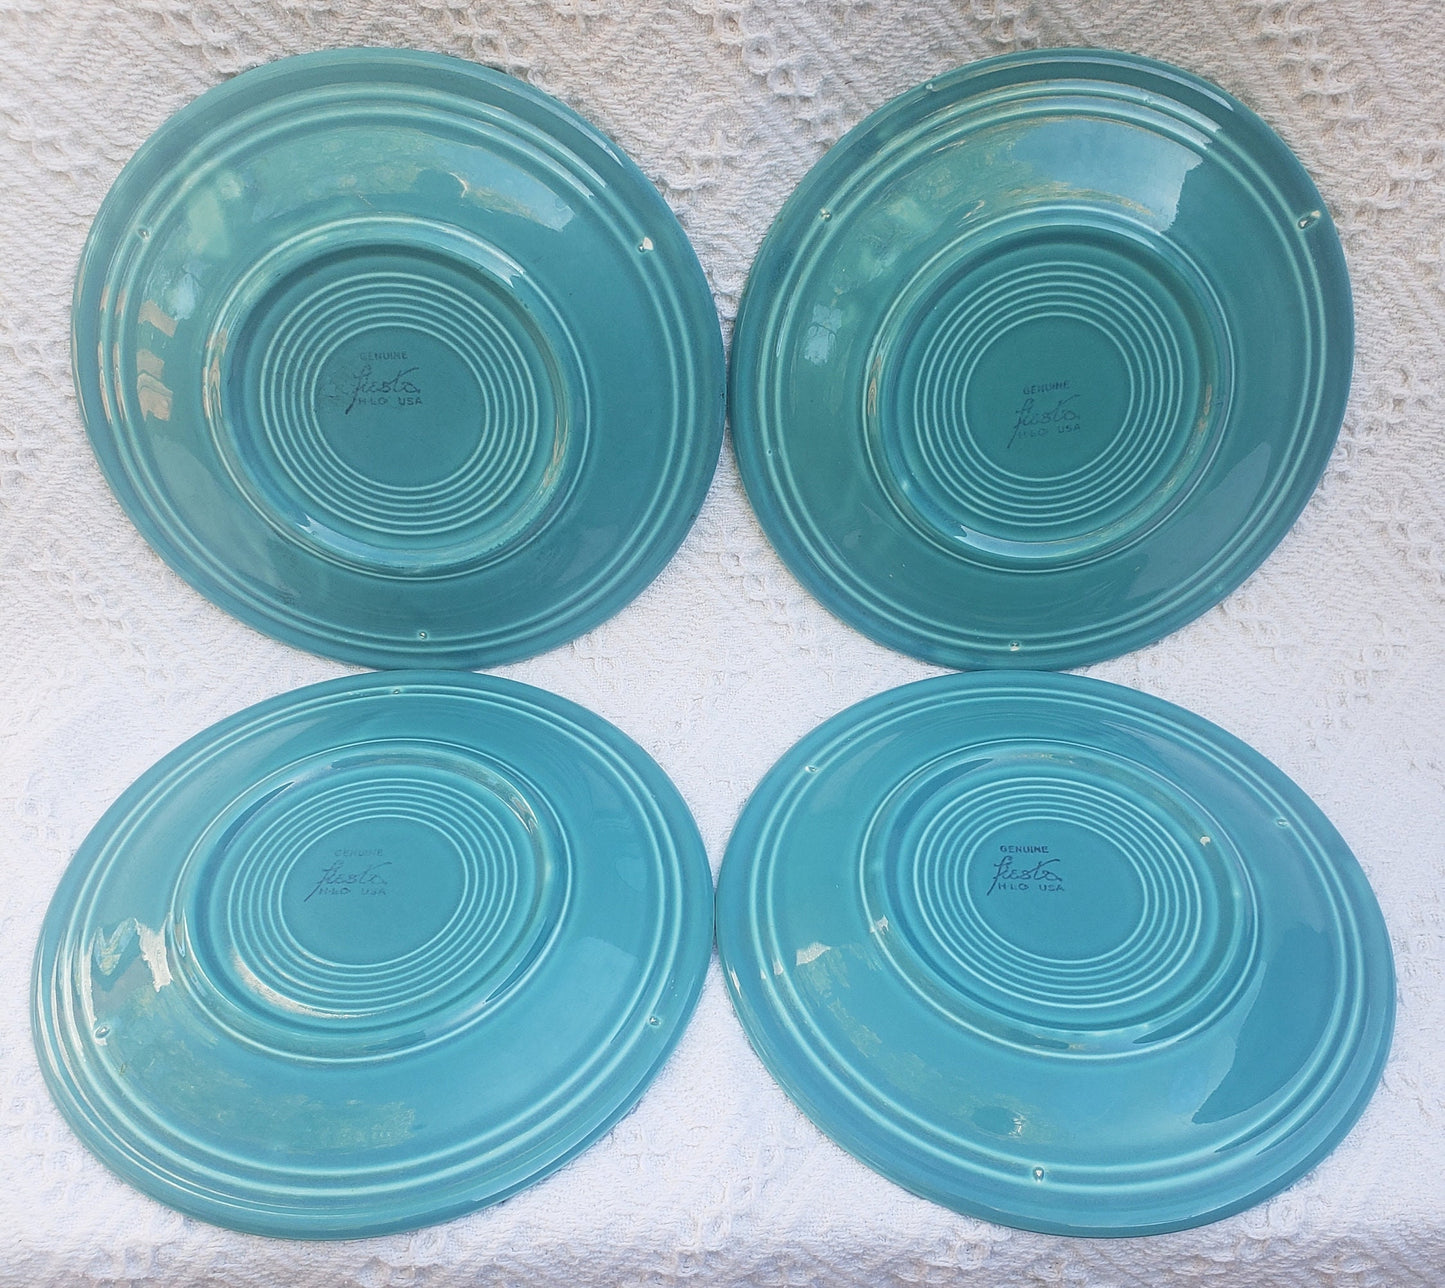 Set of 4 Vintage Fiesta Pottery 10" Dinner Plates in Original Turquoise Glaze